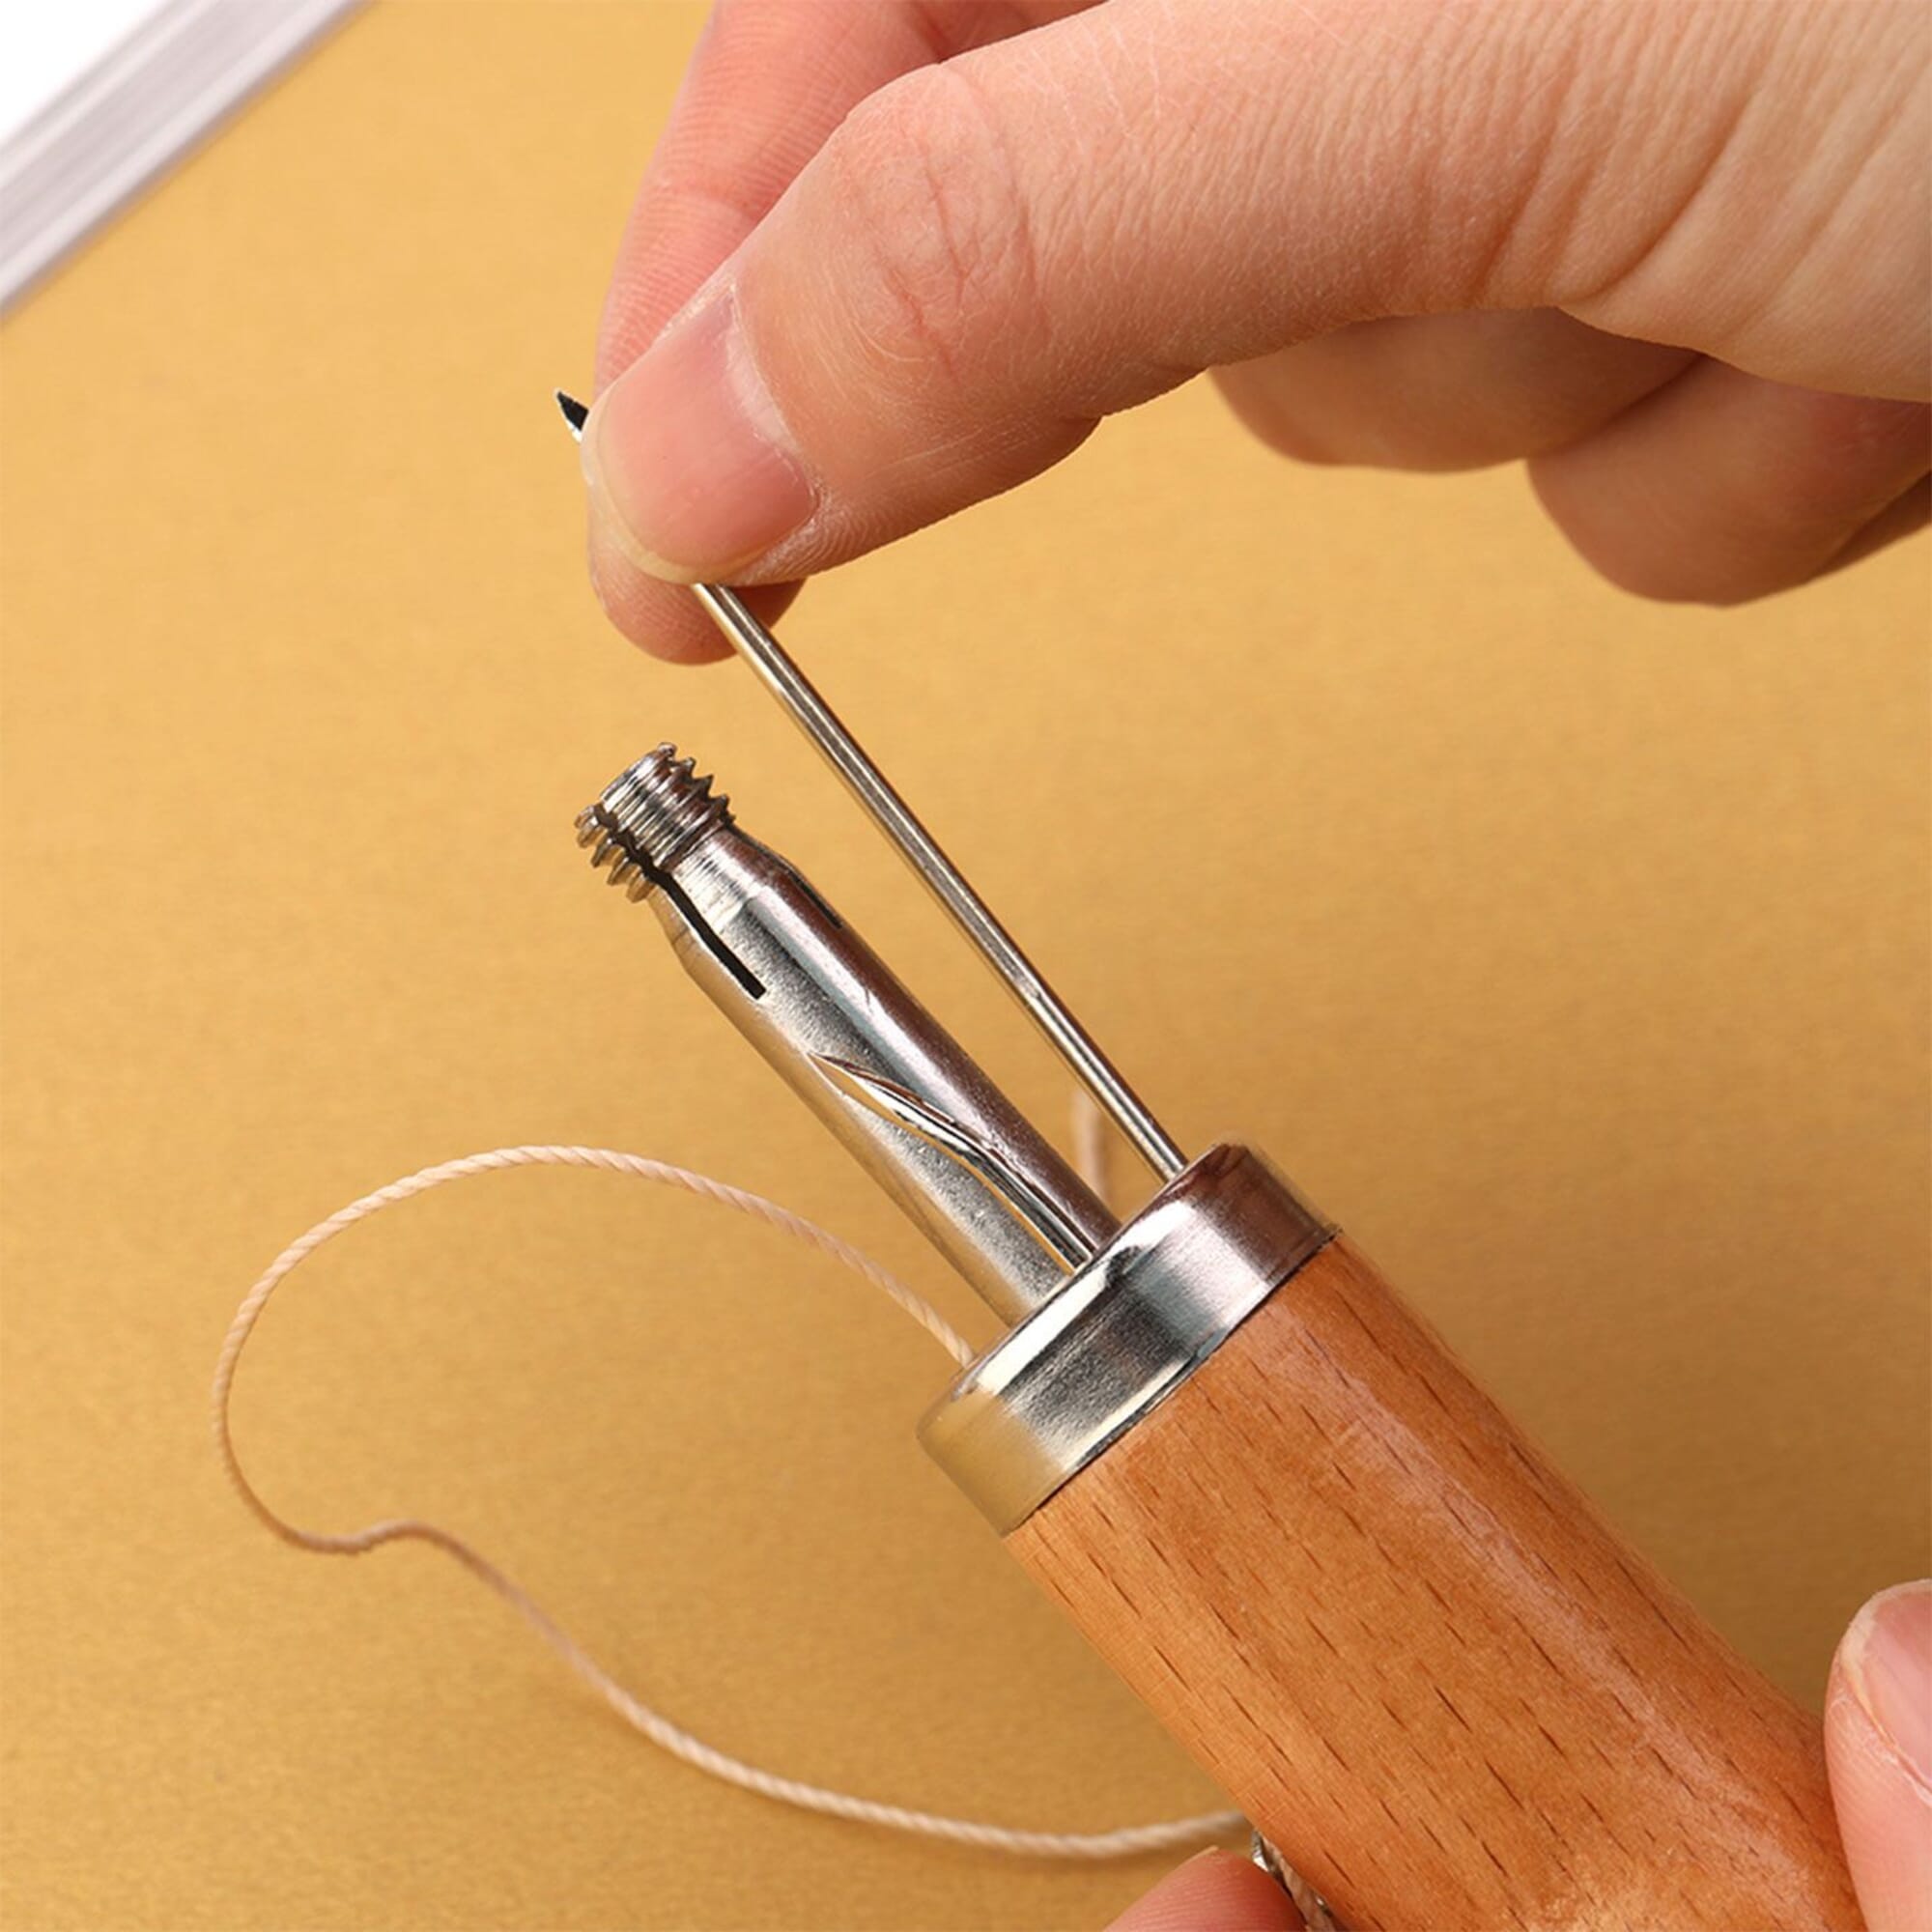 Sewing Awl Thread Fabrics Process Stitching Canvas Repair Tools